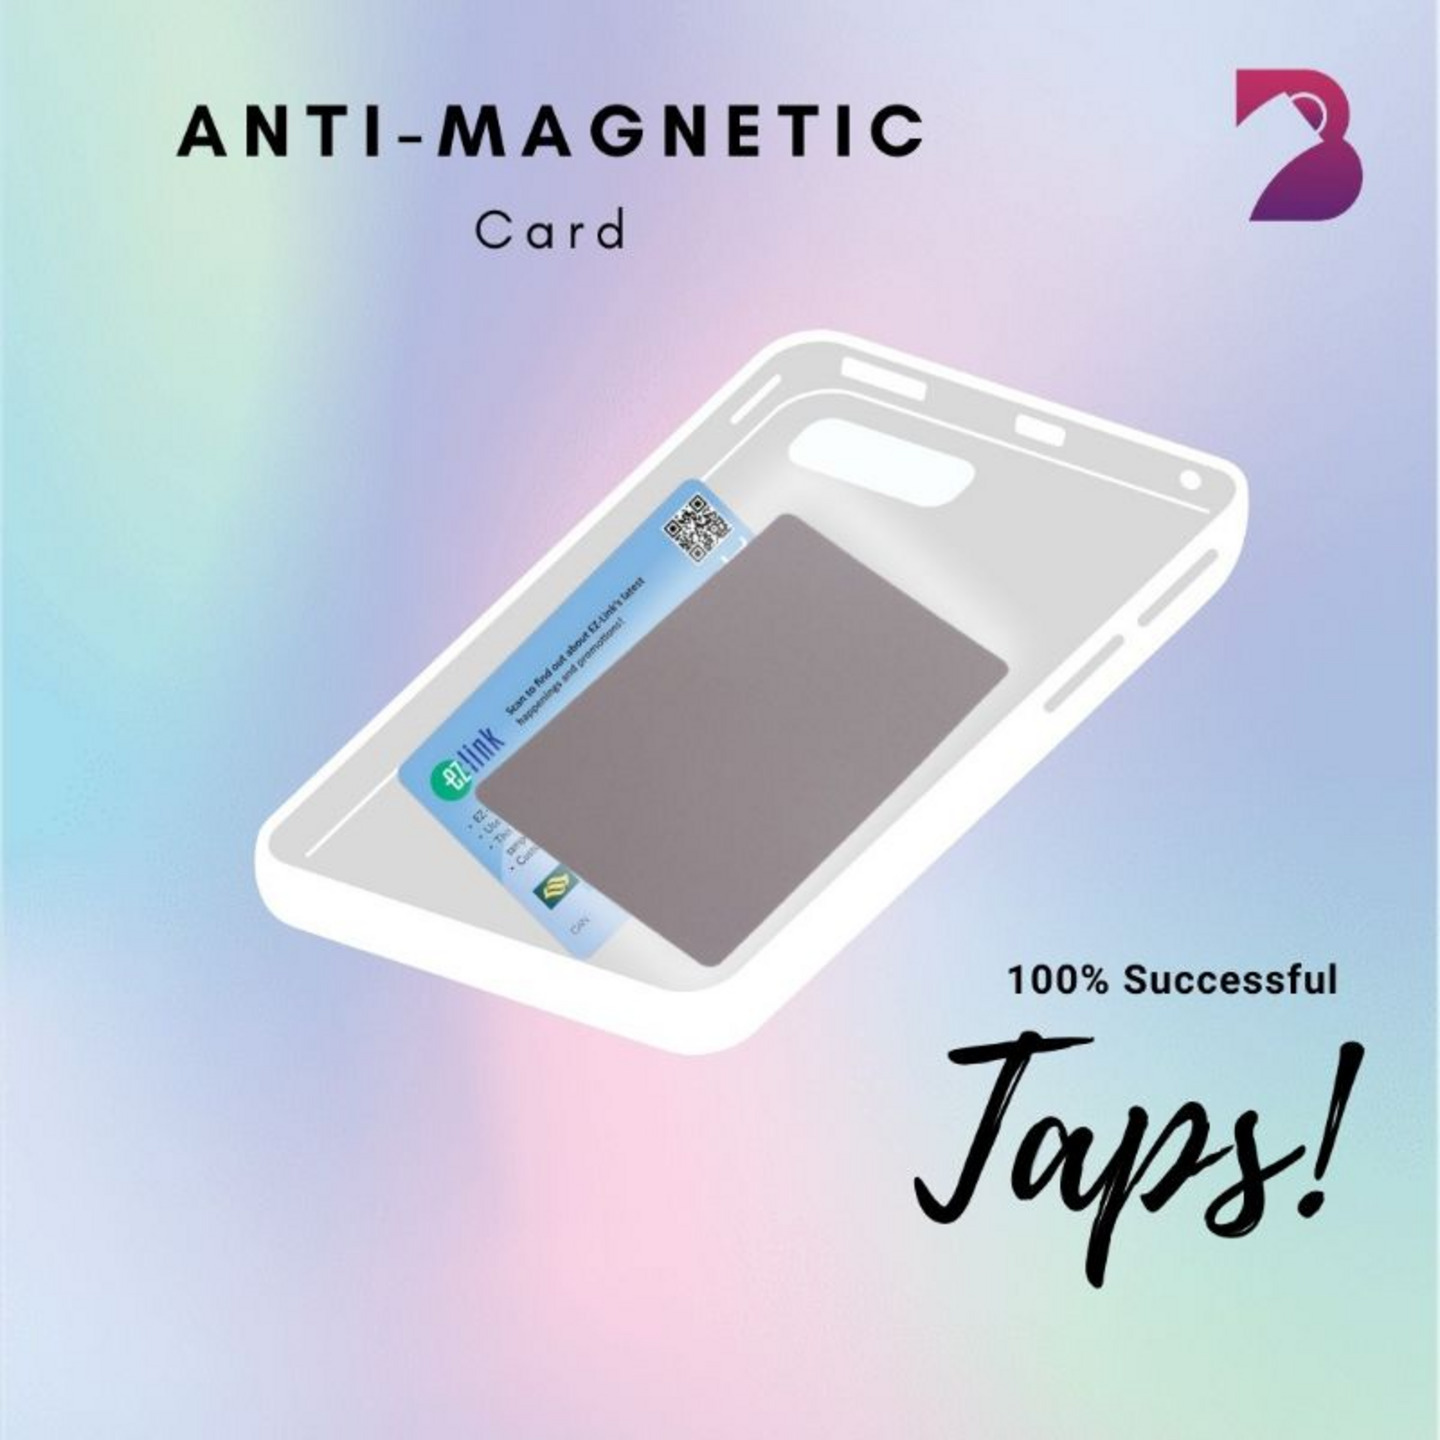 Anti-Magnetic Card